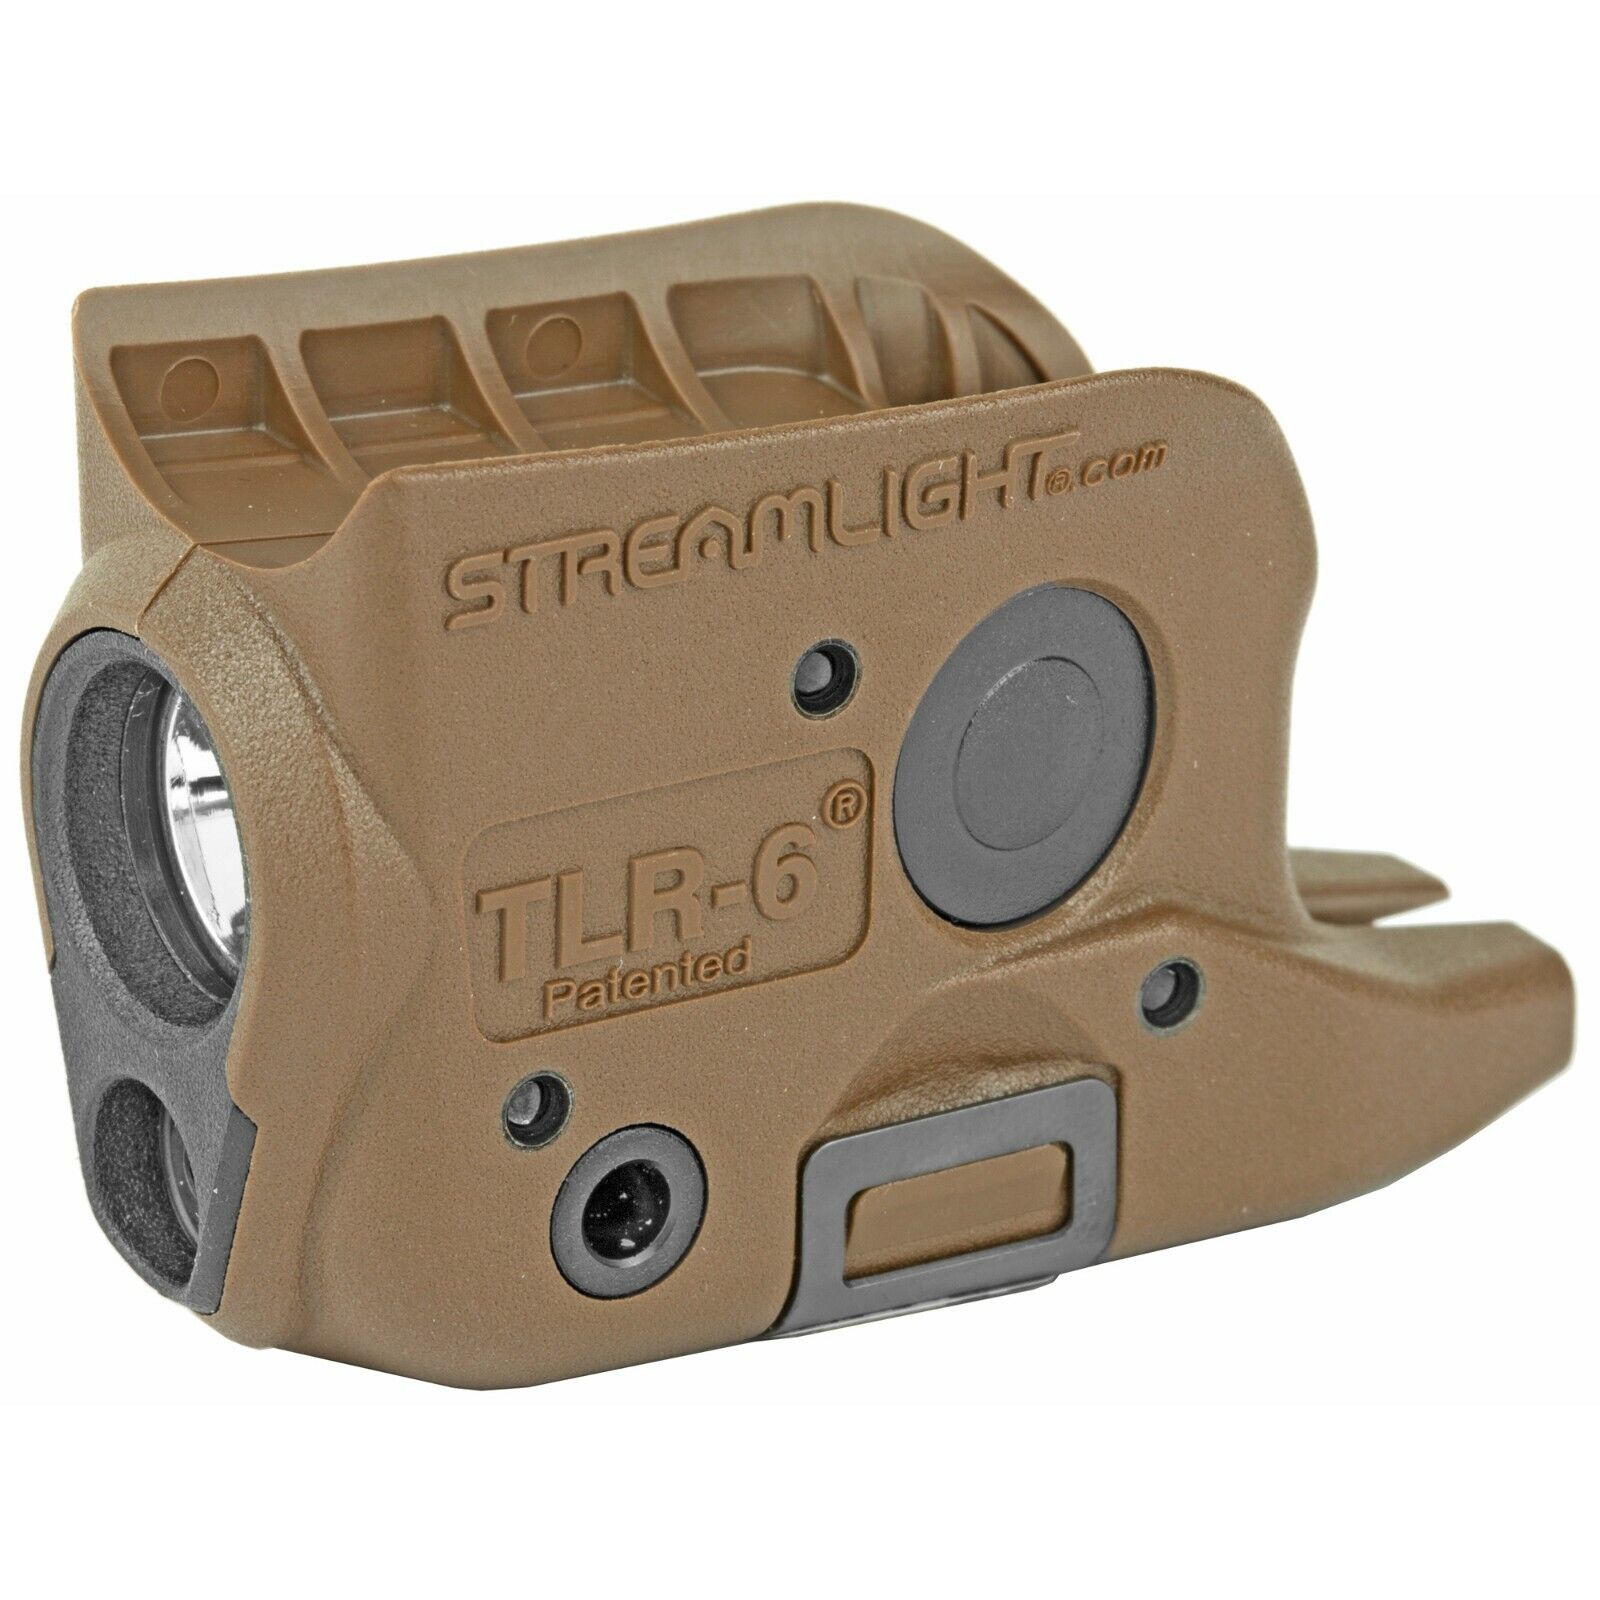 Streamlight TLR-6 Laser/Light Combo fits Glock 42, 43, 43X, 48 - FDE